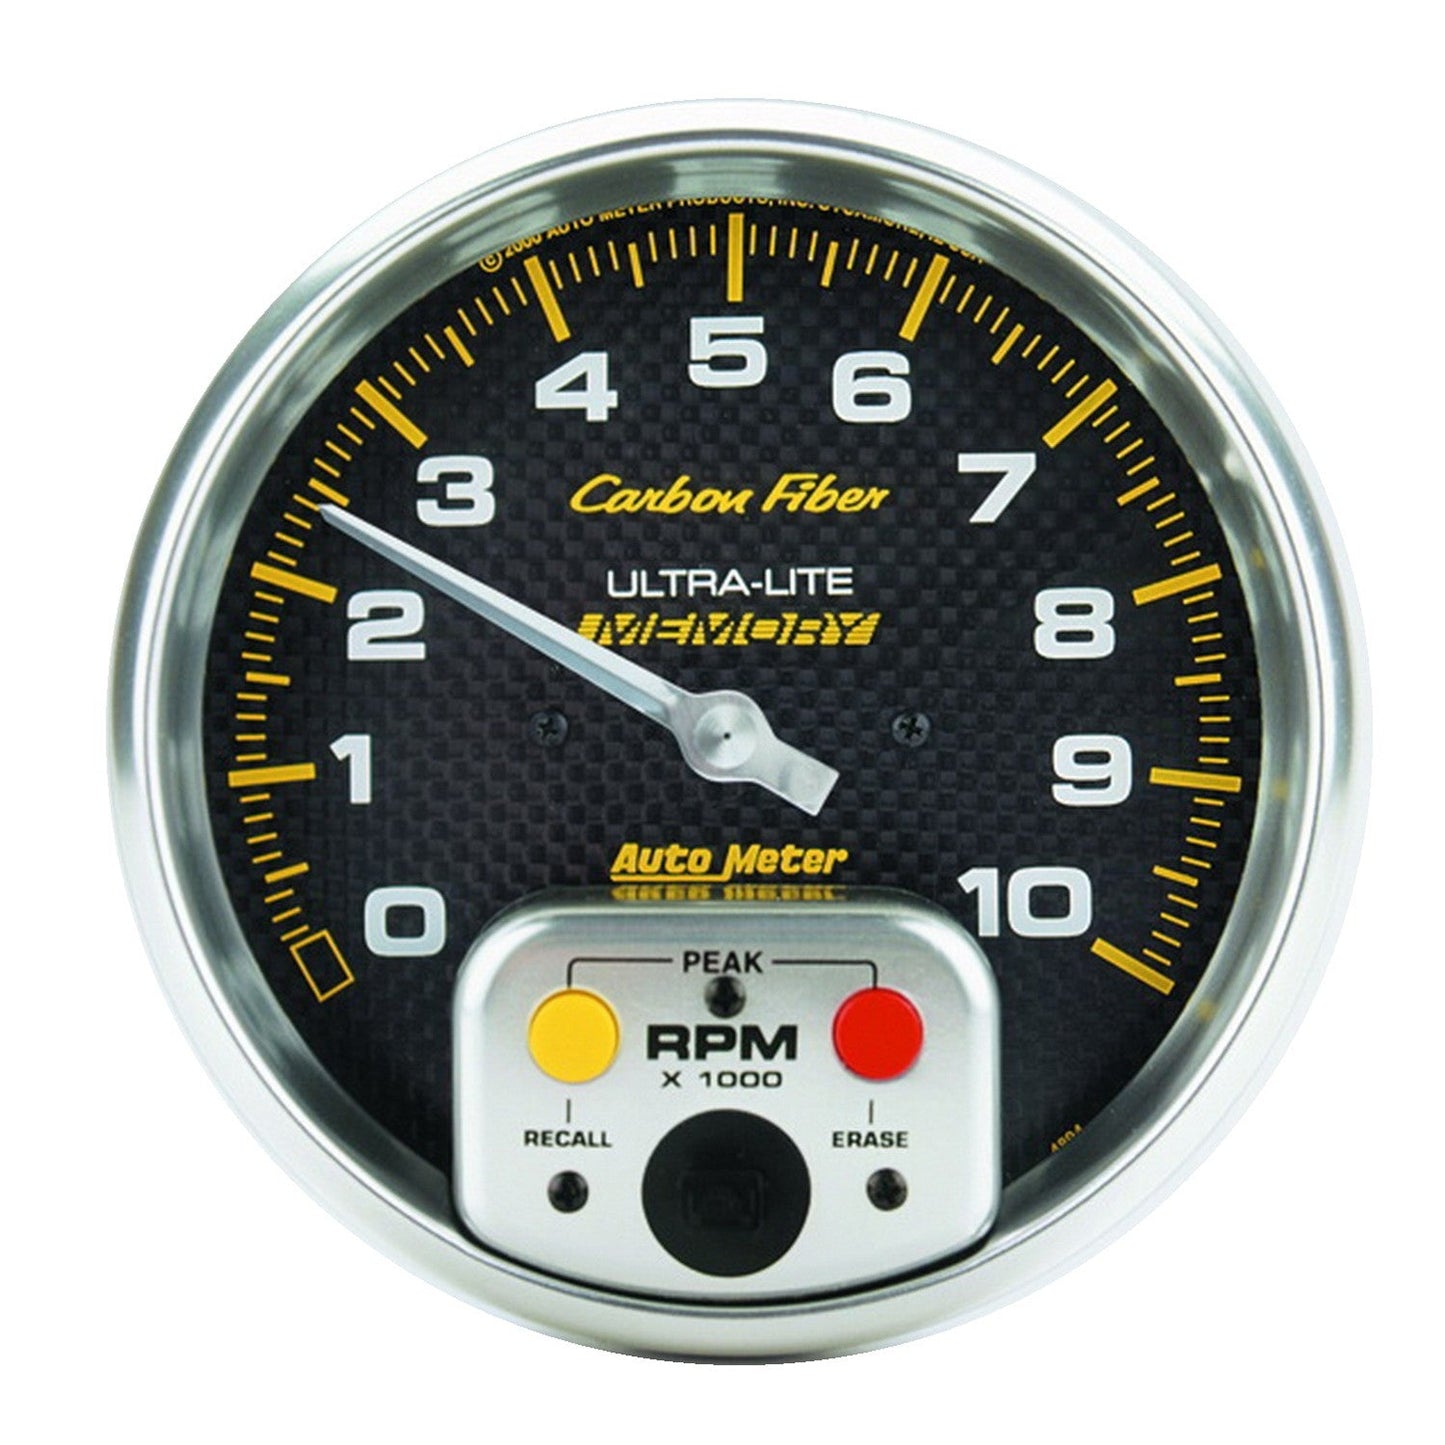 AutoMeter - 5" IN-DASH TACHOMETER W/ MEMORY, 0-10,000 RPM, CARBON FIBER (4894)